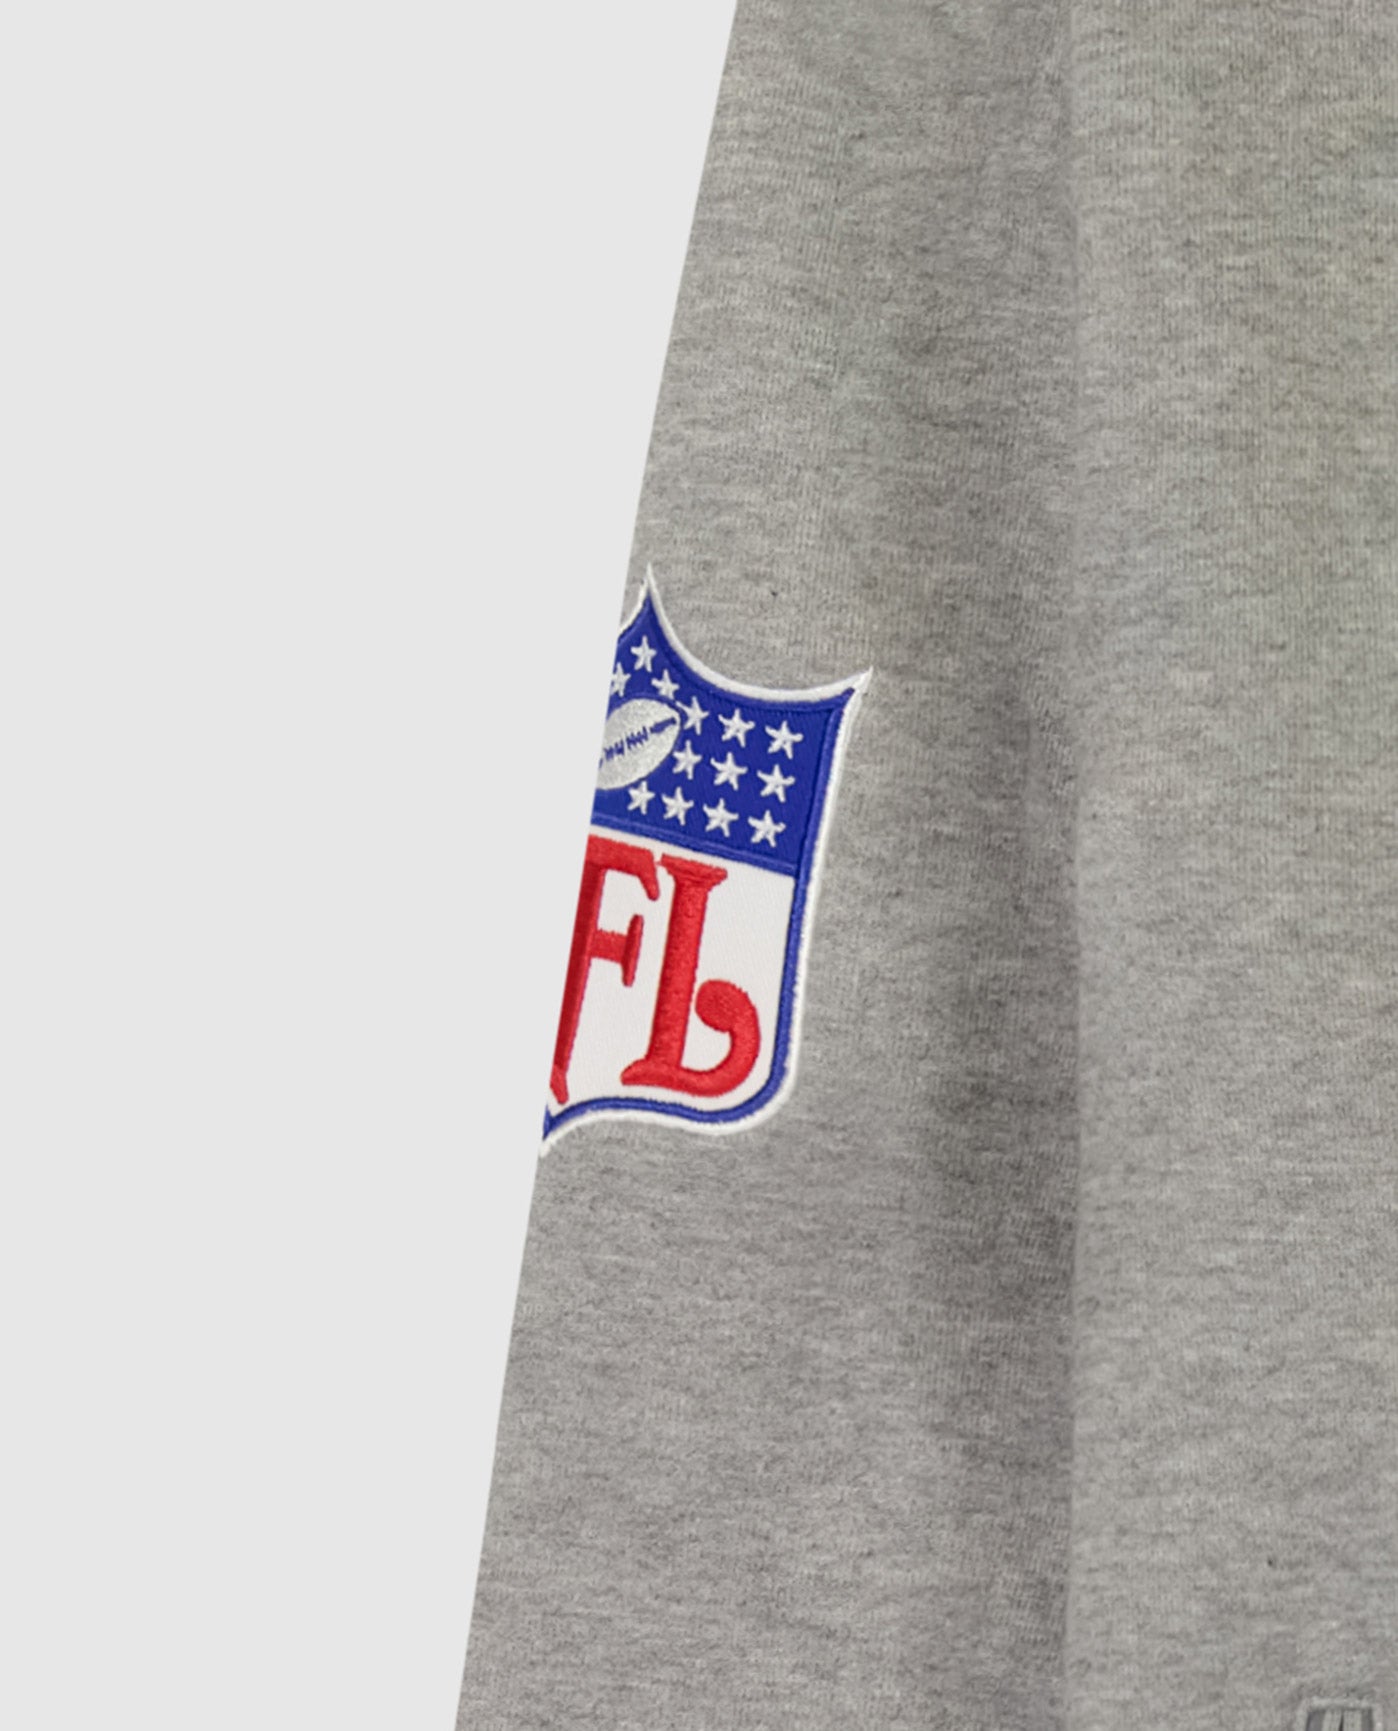 NFL Logo on Sleeve | Buccaneers Heather Grey